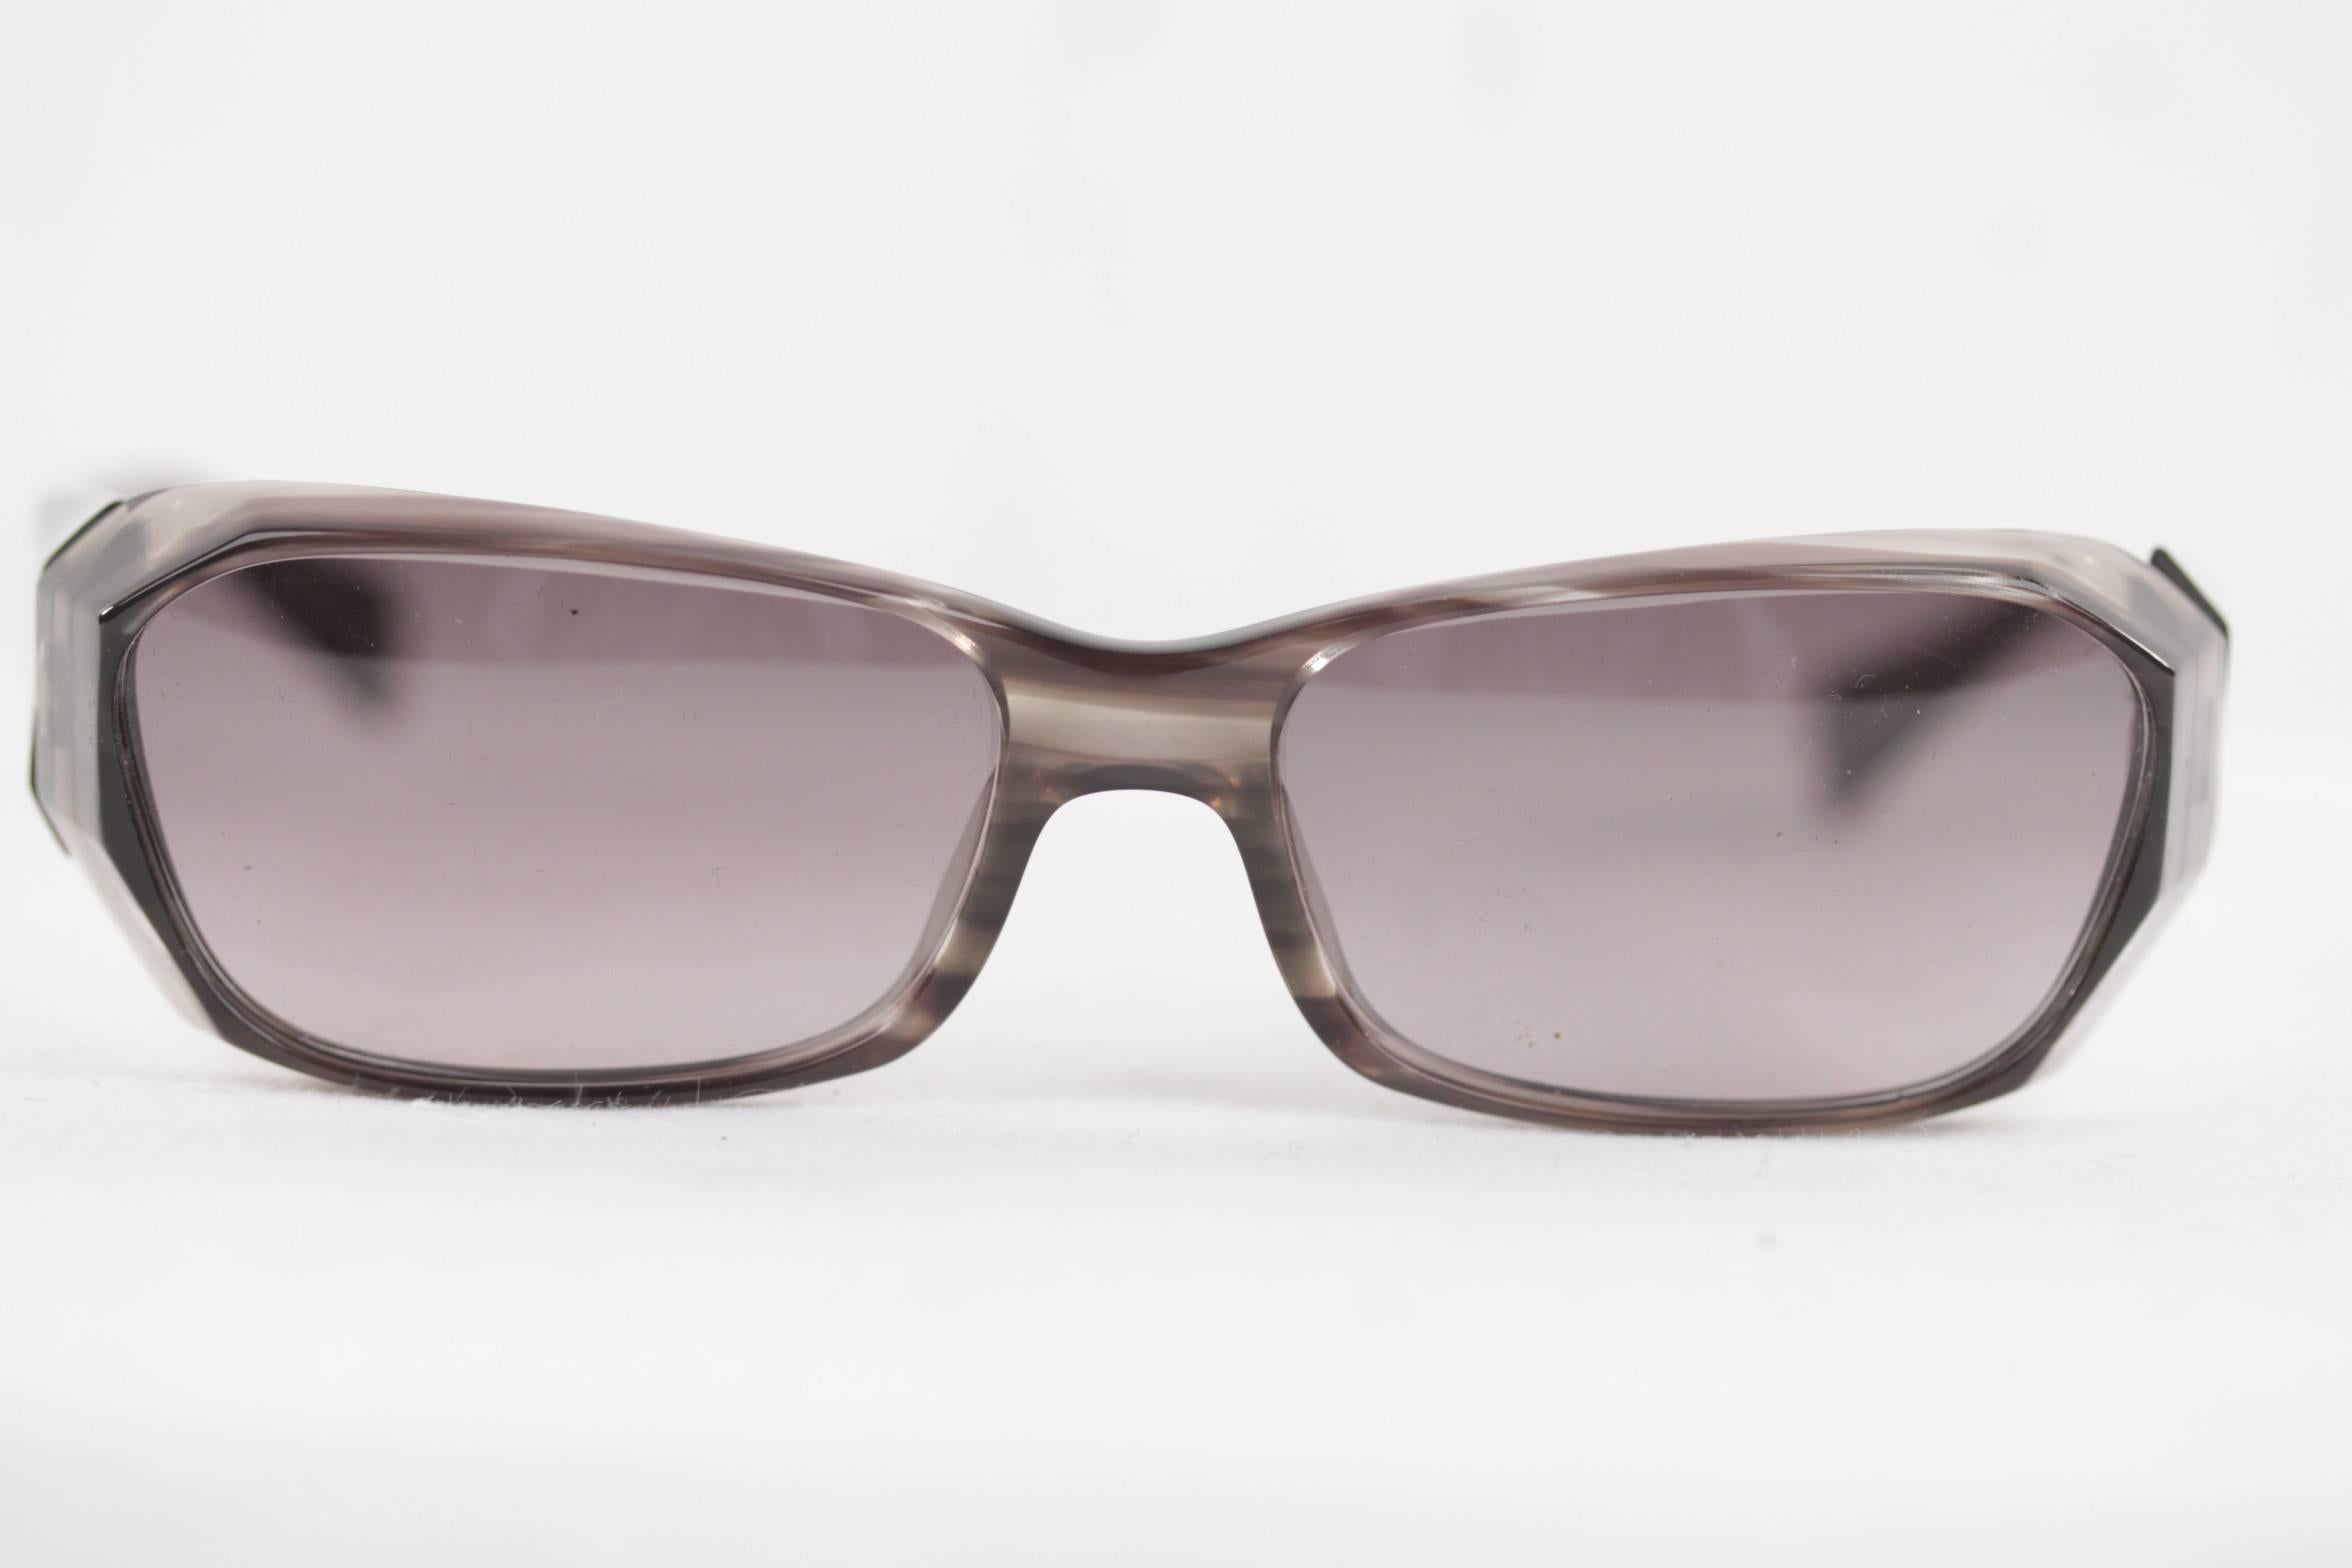 ALAIN MIKLI paris vintage sunglasses A0323-03 gray frame EYEWEAR w/CASE 1